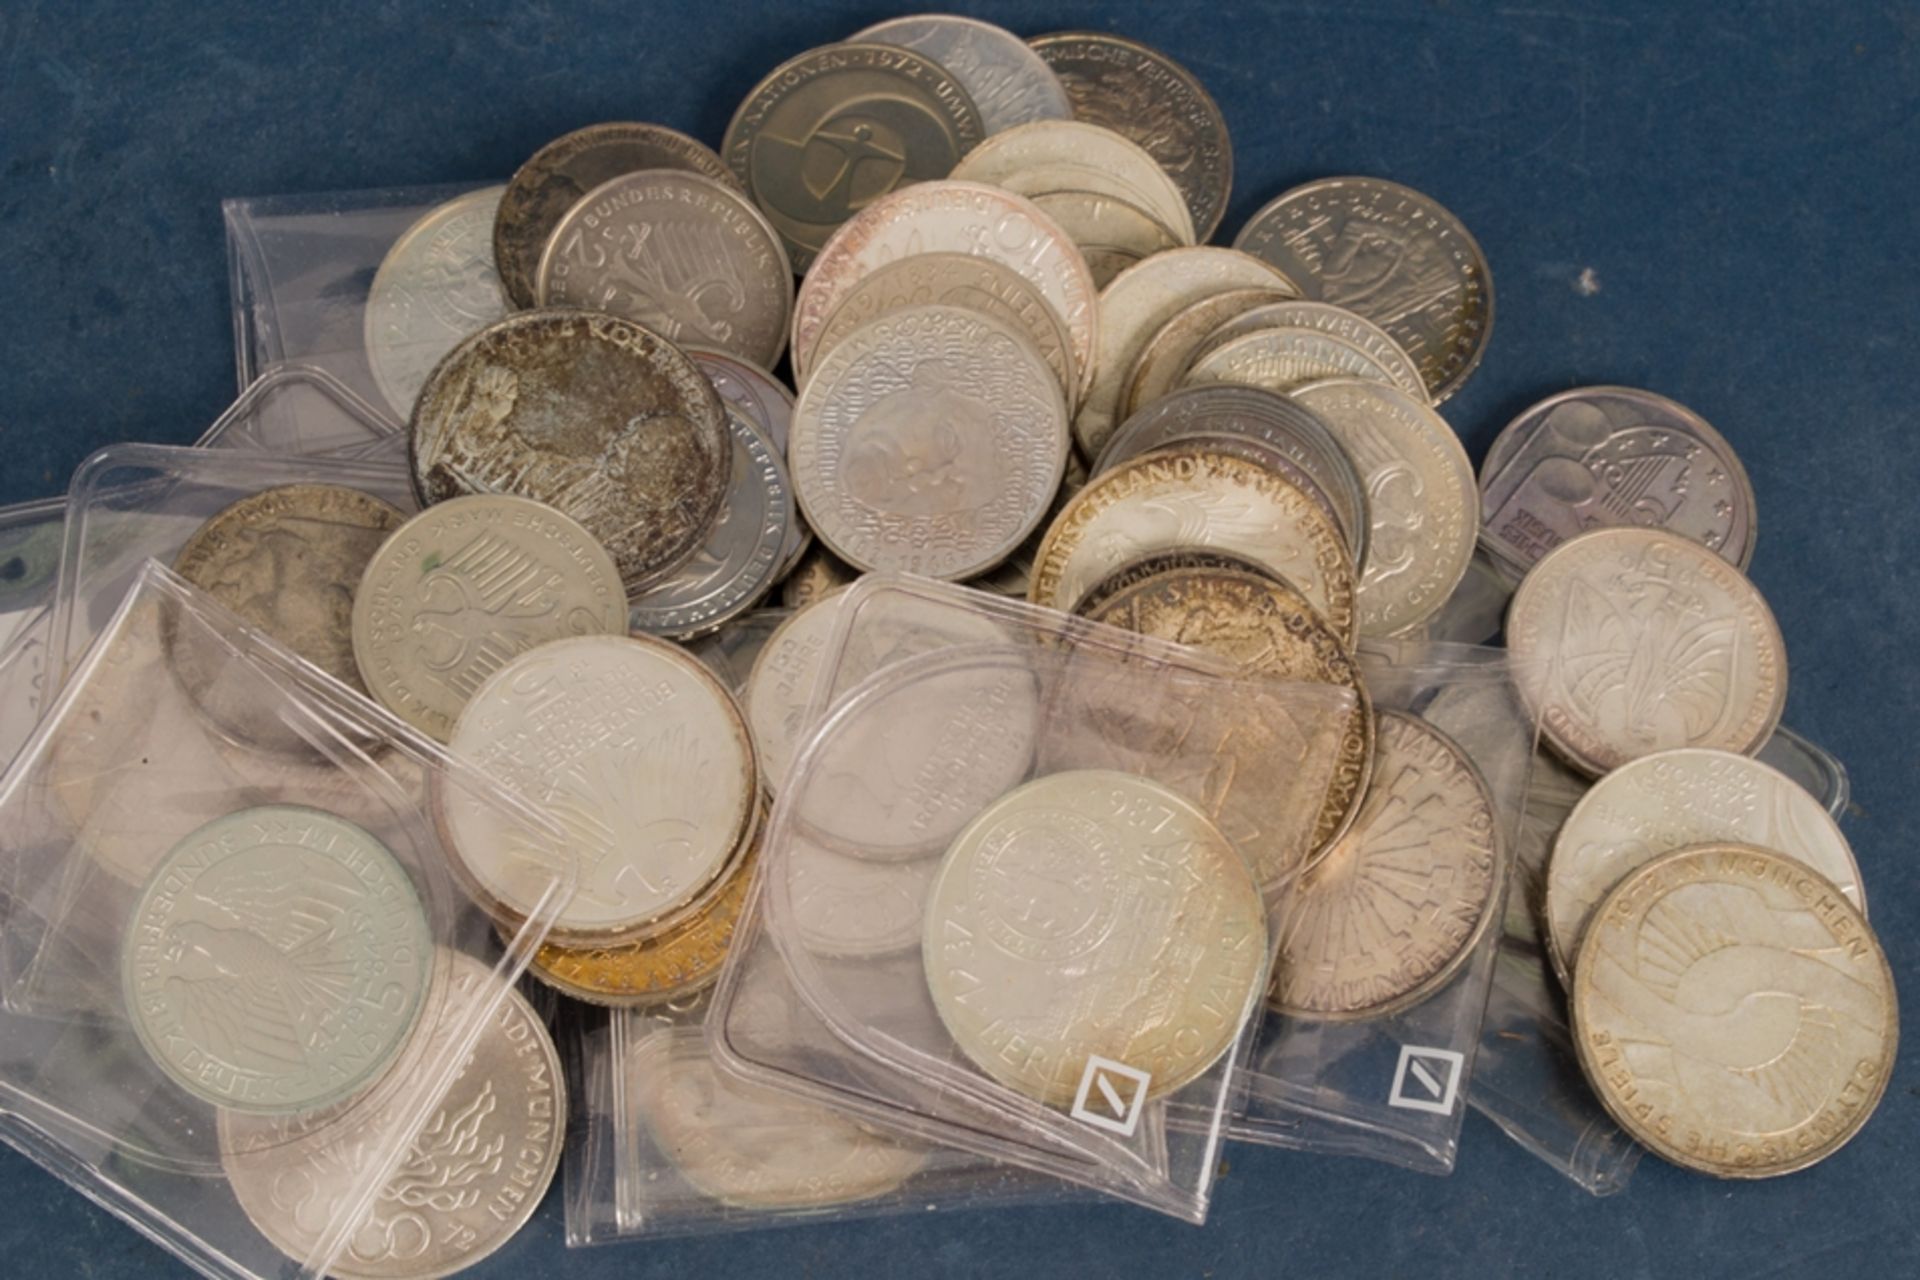 Ca. 56teilige Münzsammlung, überwiegend DM-Münzen: 1x 1DM, 5x 2DM, 26x 5DM, 19x 10DM, 2x Half